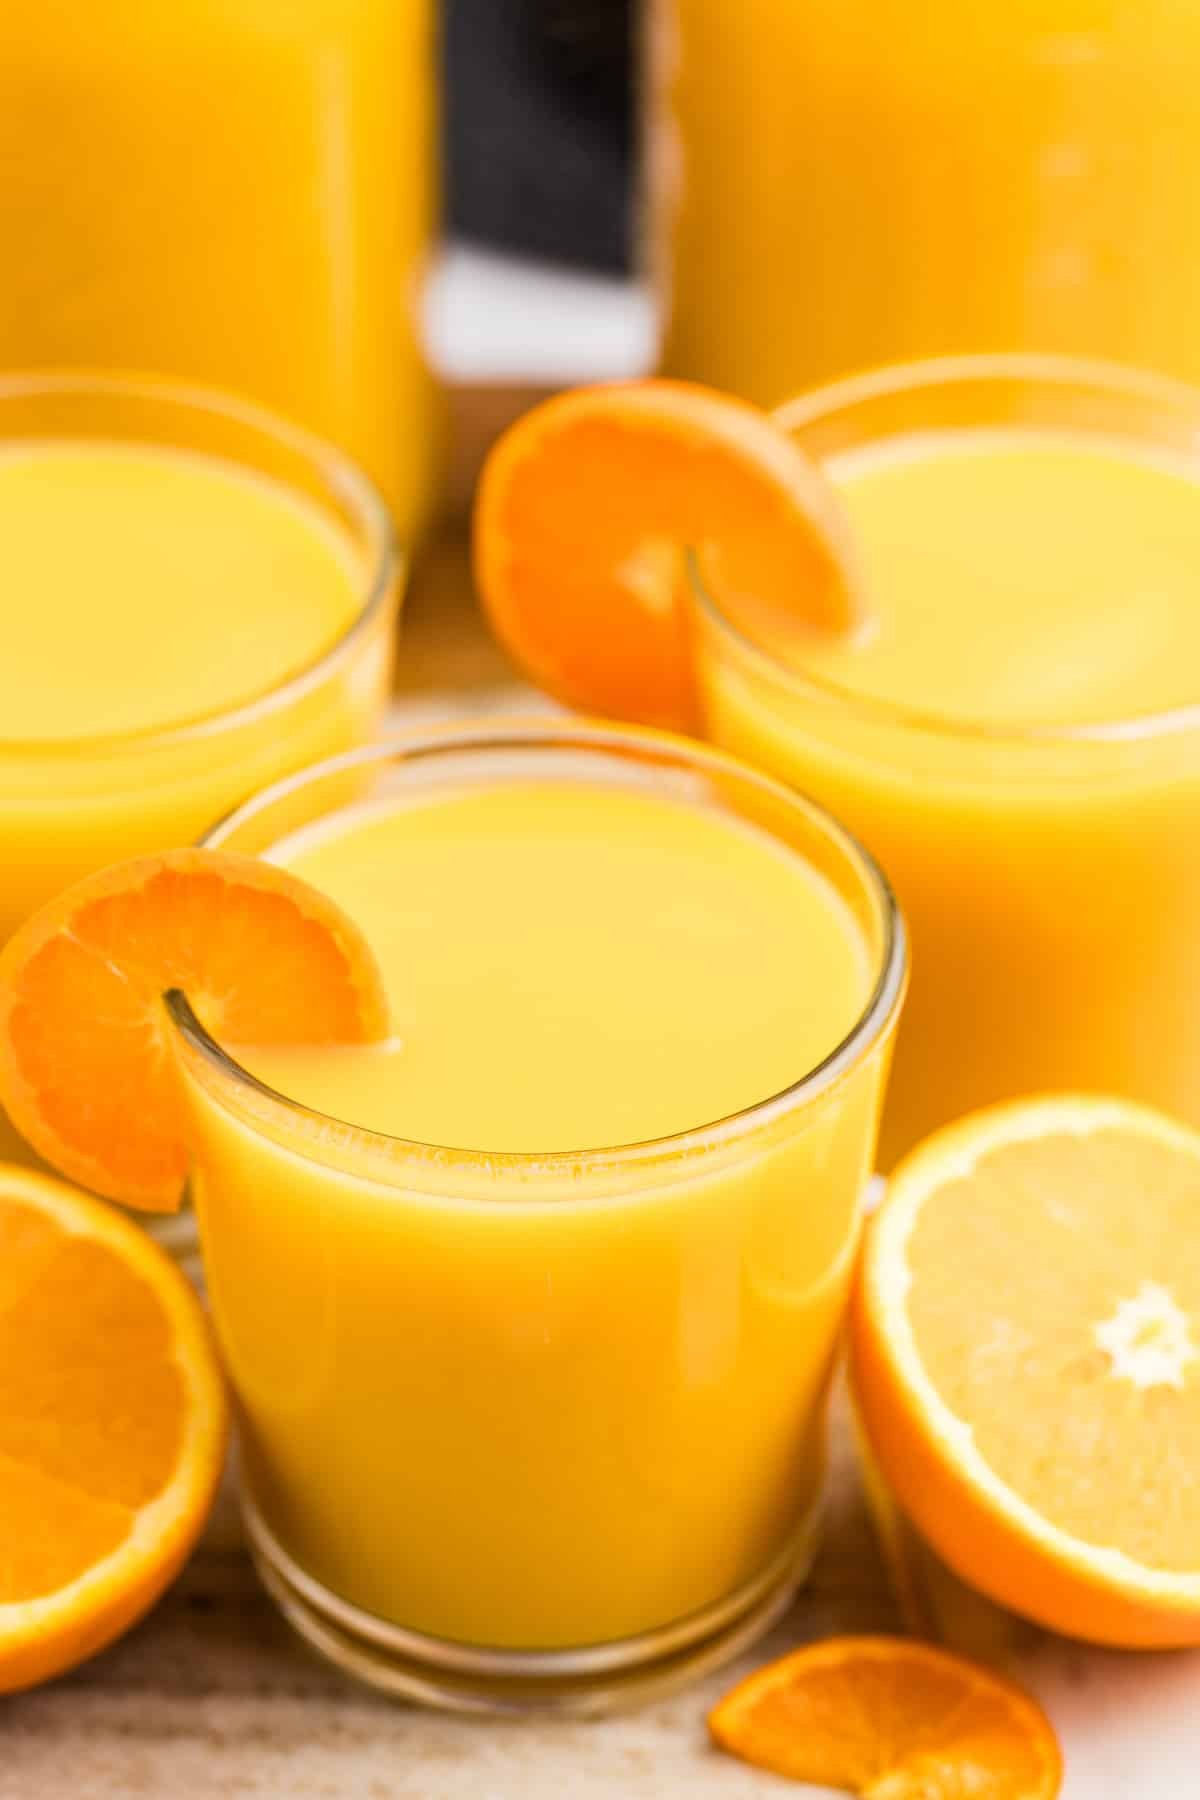 Glasses filled with orange juice and garnished with orange slices.